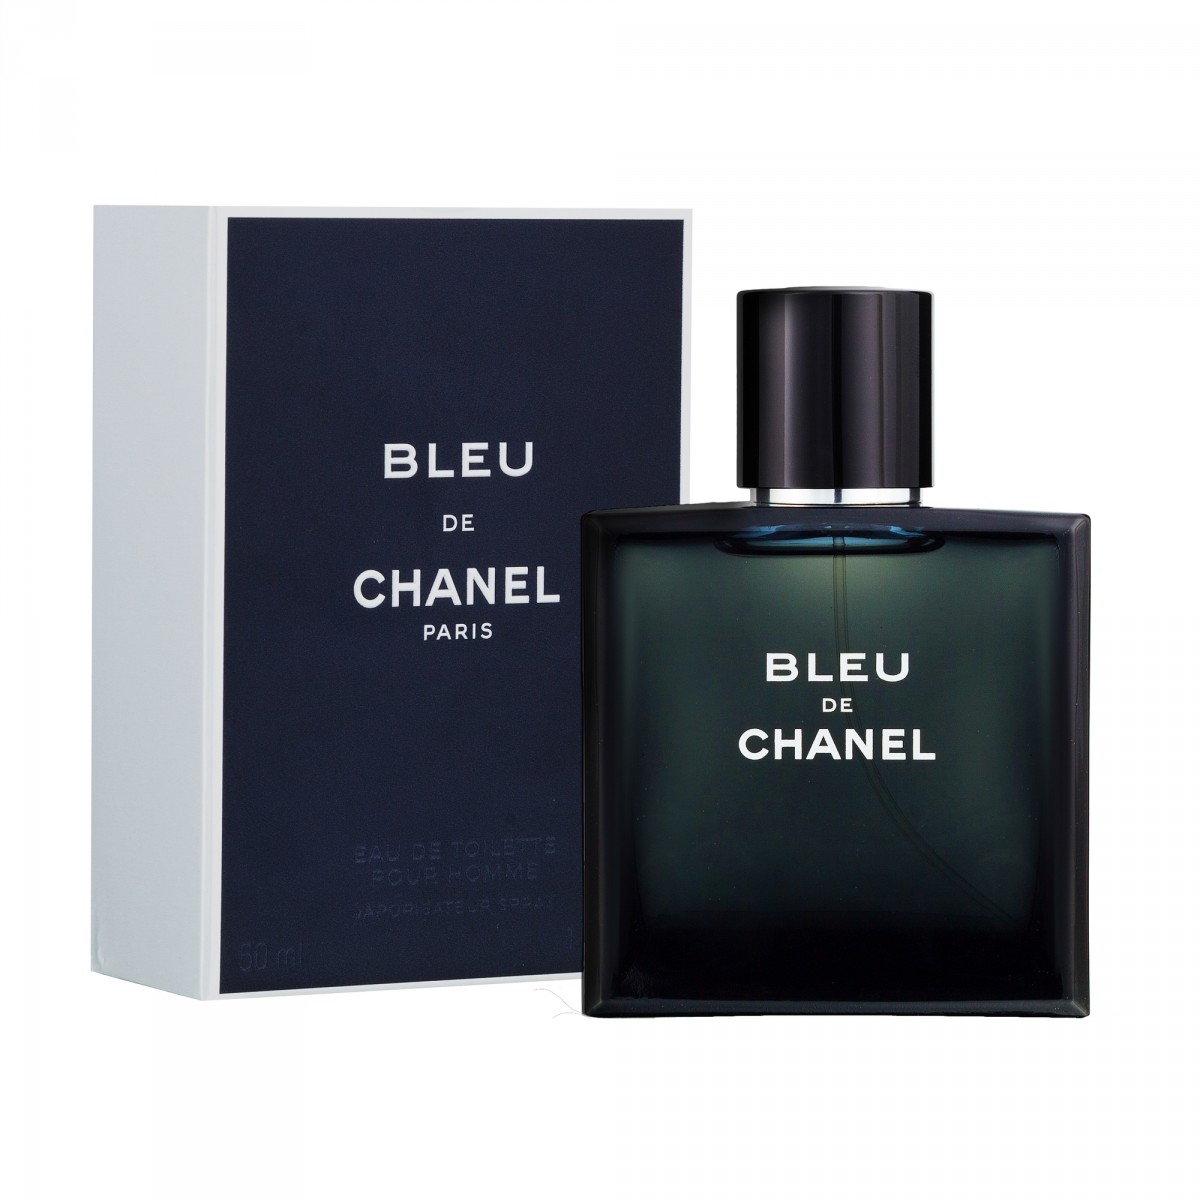 Bleu de Chanel – Eau de toilette – For Men – 100 ml – Welcome to Helen  international cosmetics – HIC